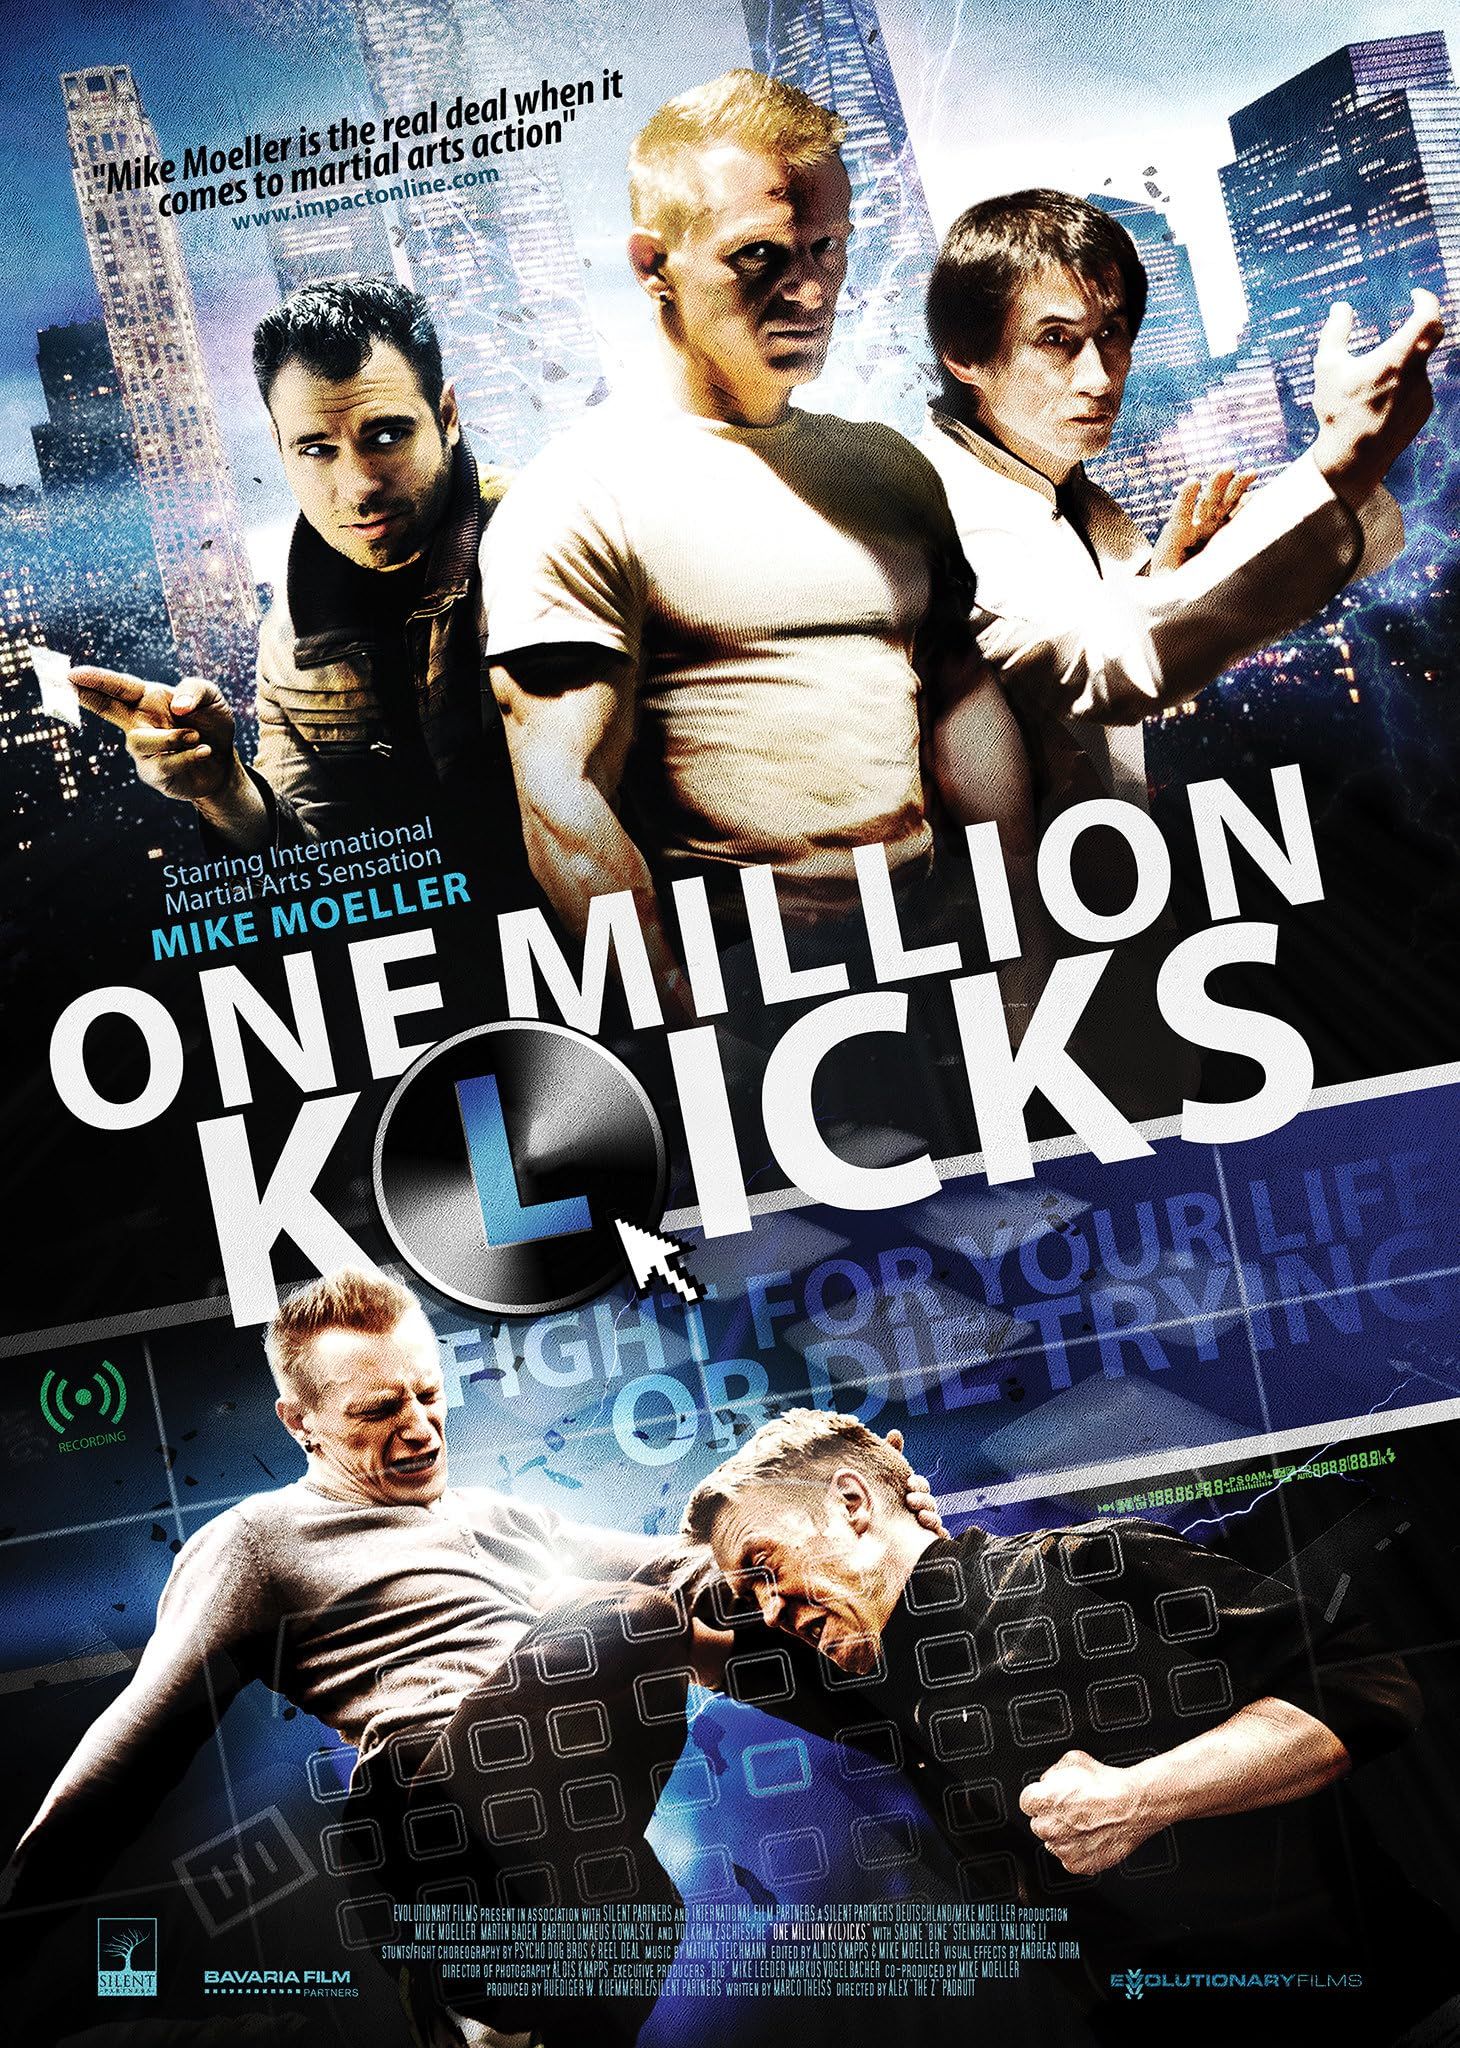 One Million Klicks (2015) Hindi Dubbed Movie download full movie